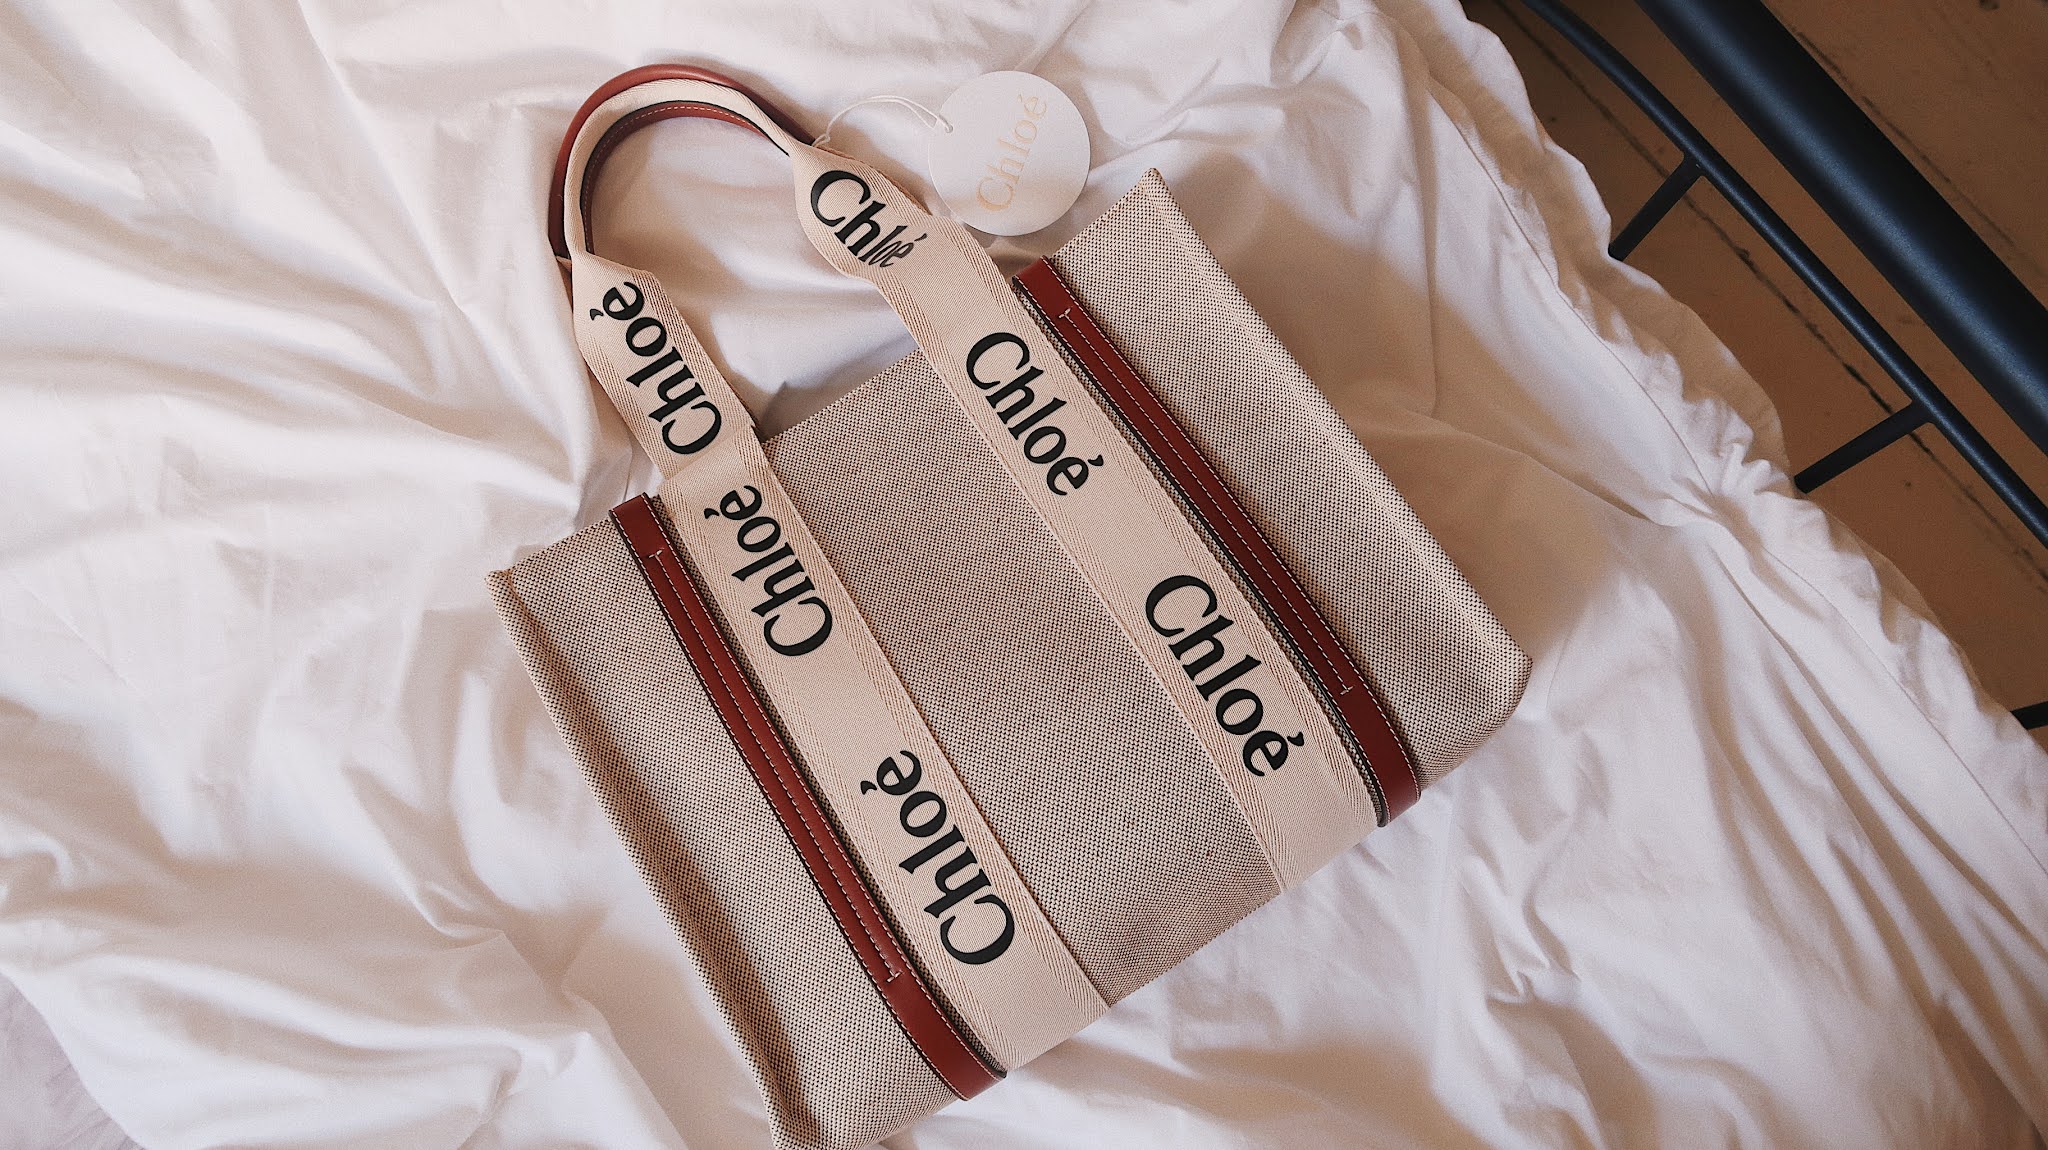 Louis Vuitton October 2021 Price Increase for Bags - Handbagholic